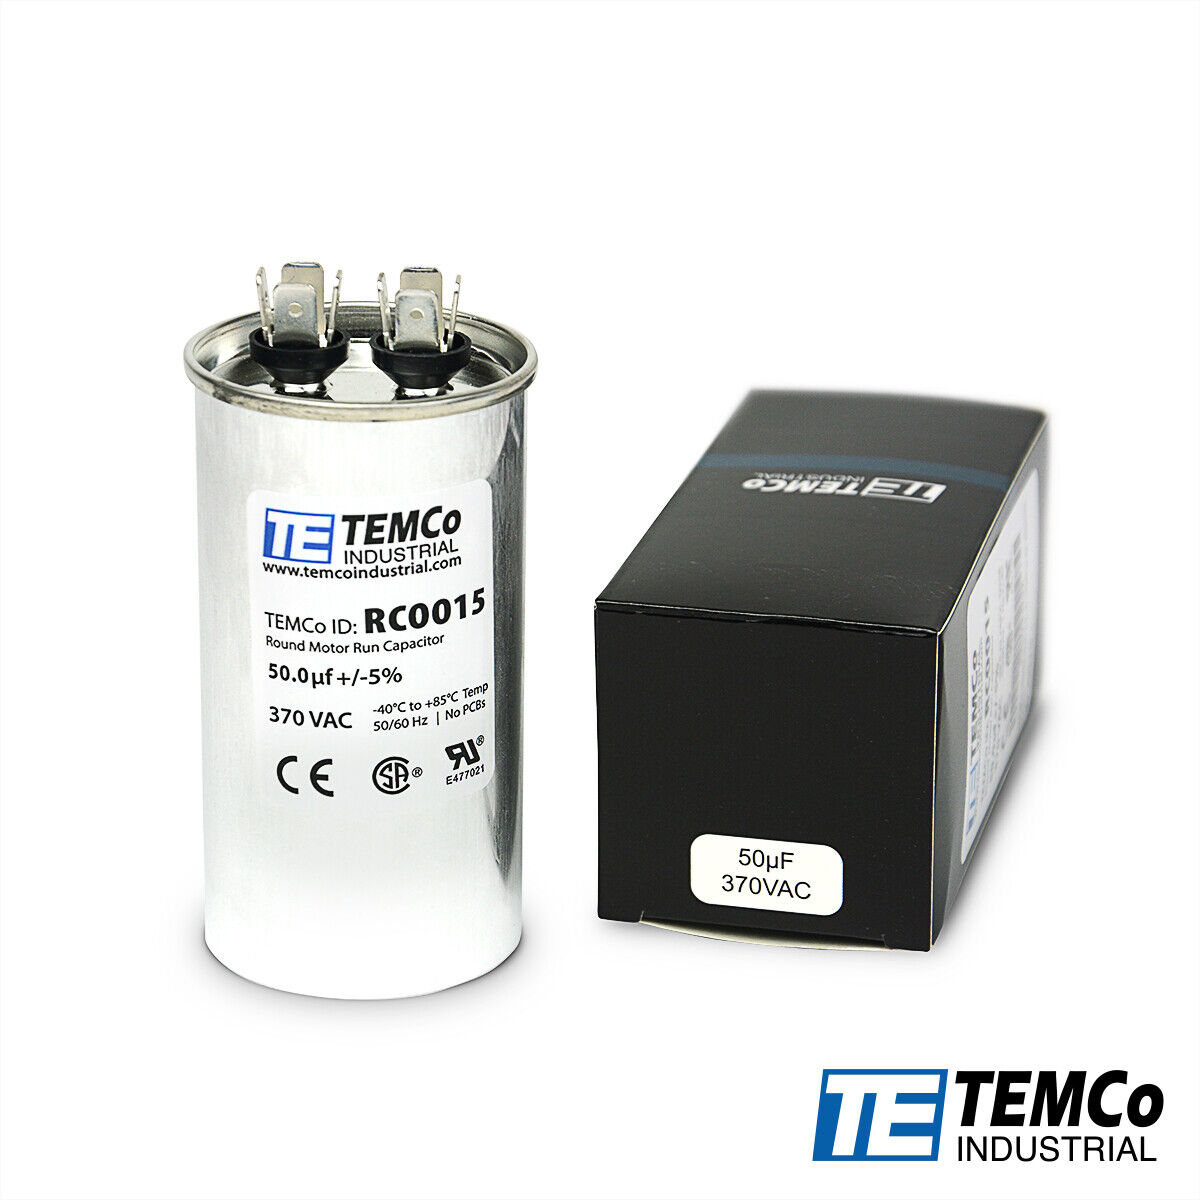 TEMCo 50 uf/MFD 370 VAC volts Round Run Capacitor 50/60 Hz -Lot-1